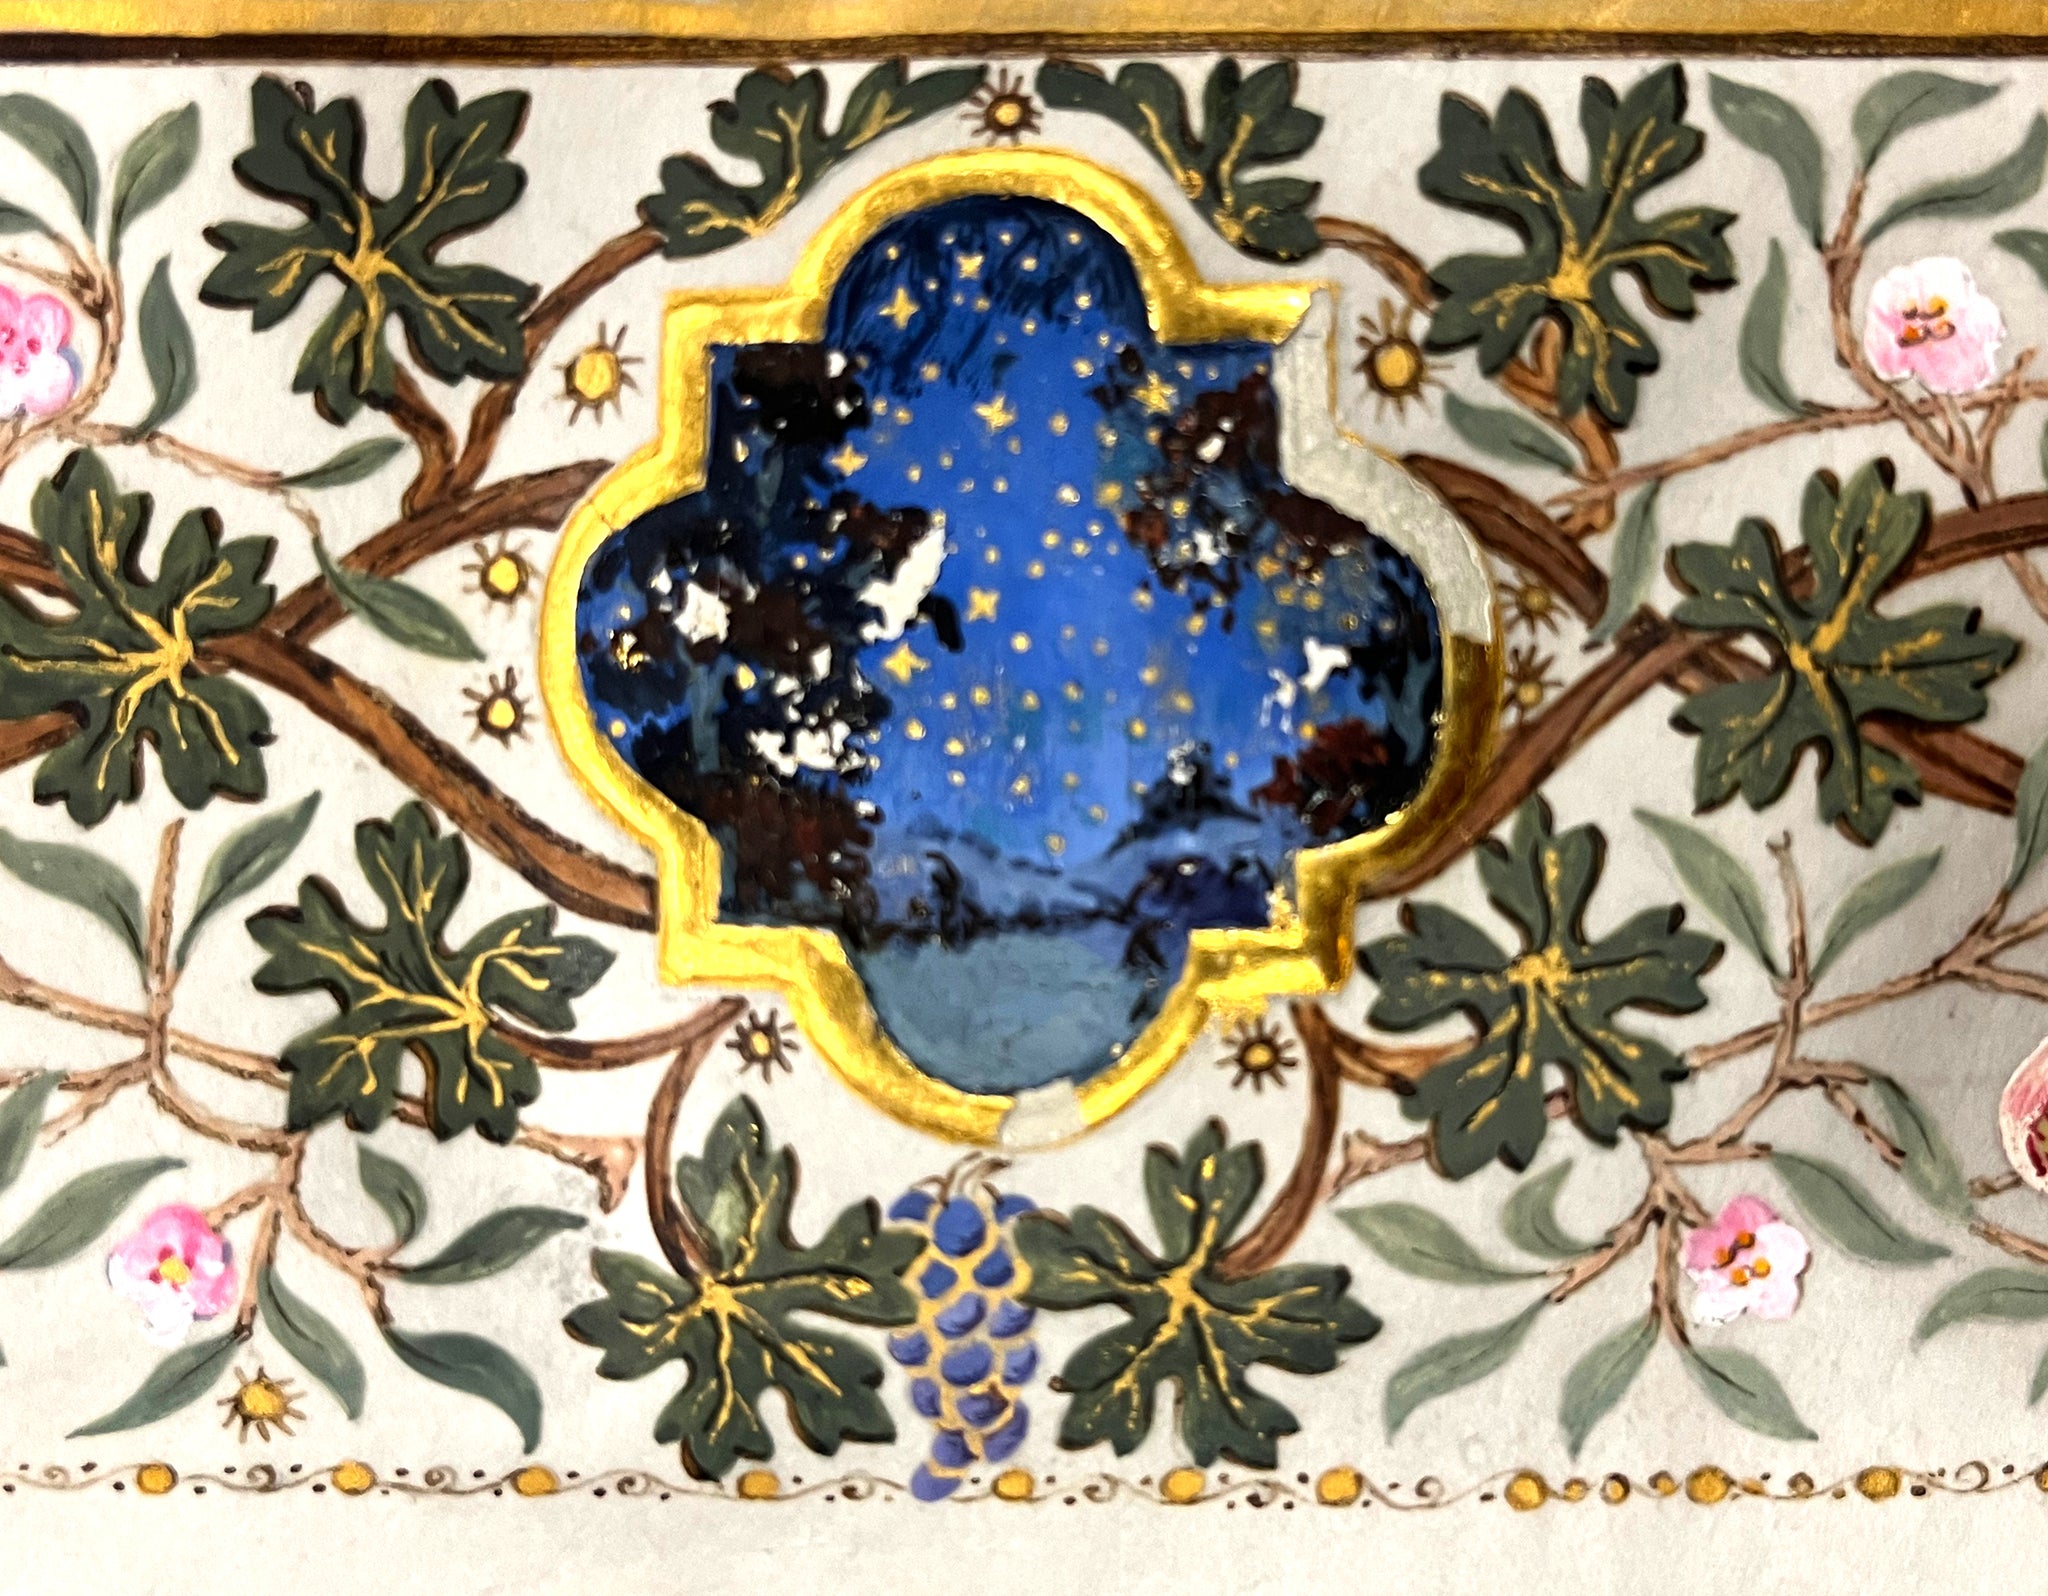 Beautiful, Intricate Illuminated Manuscript Version of Hopkins' Beloved Poem, "The Starlight Night"